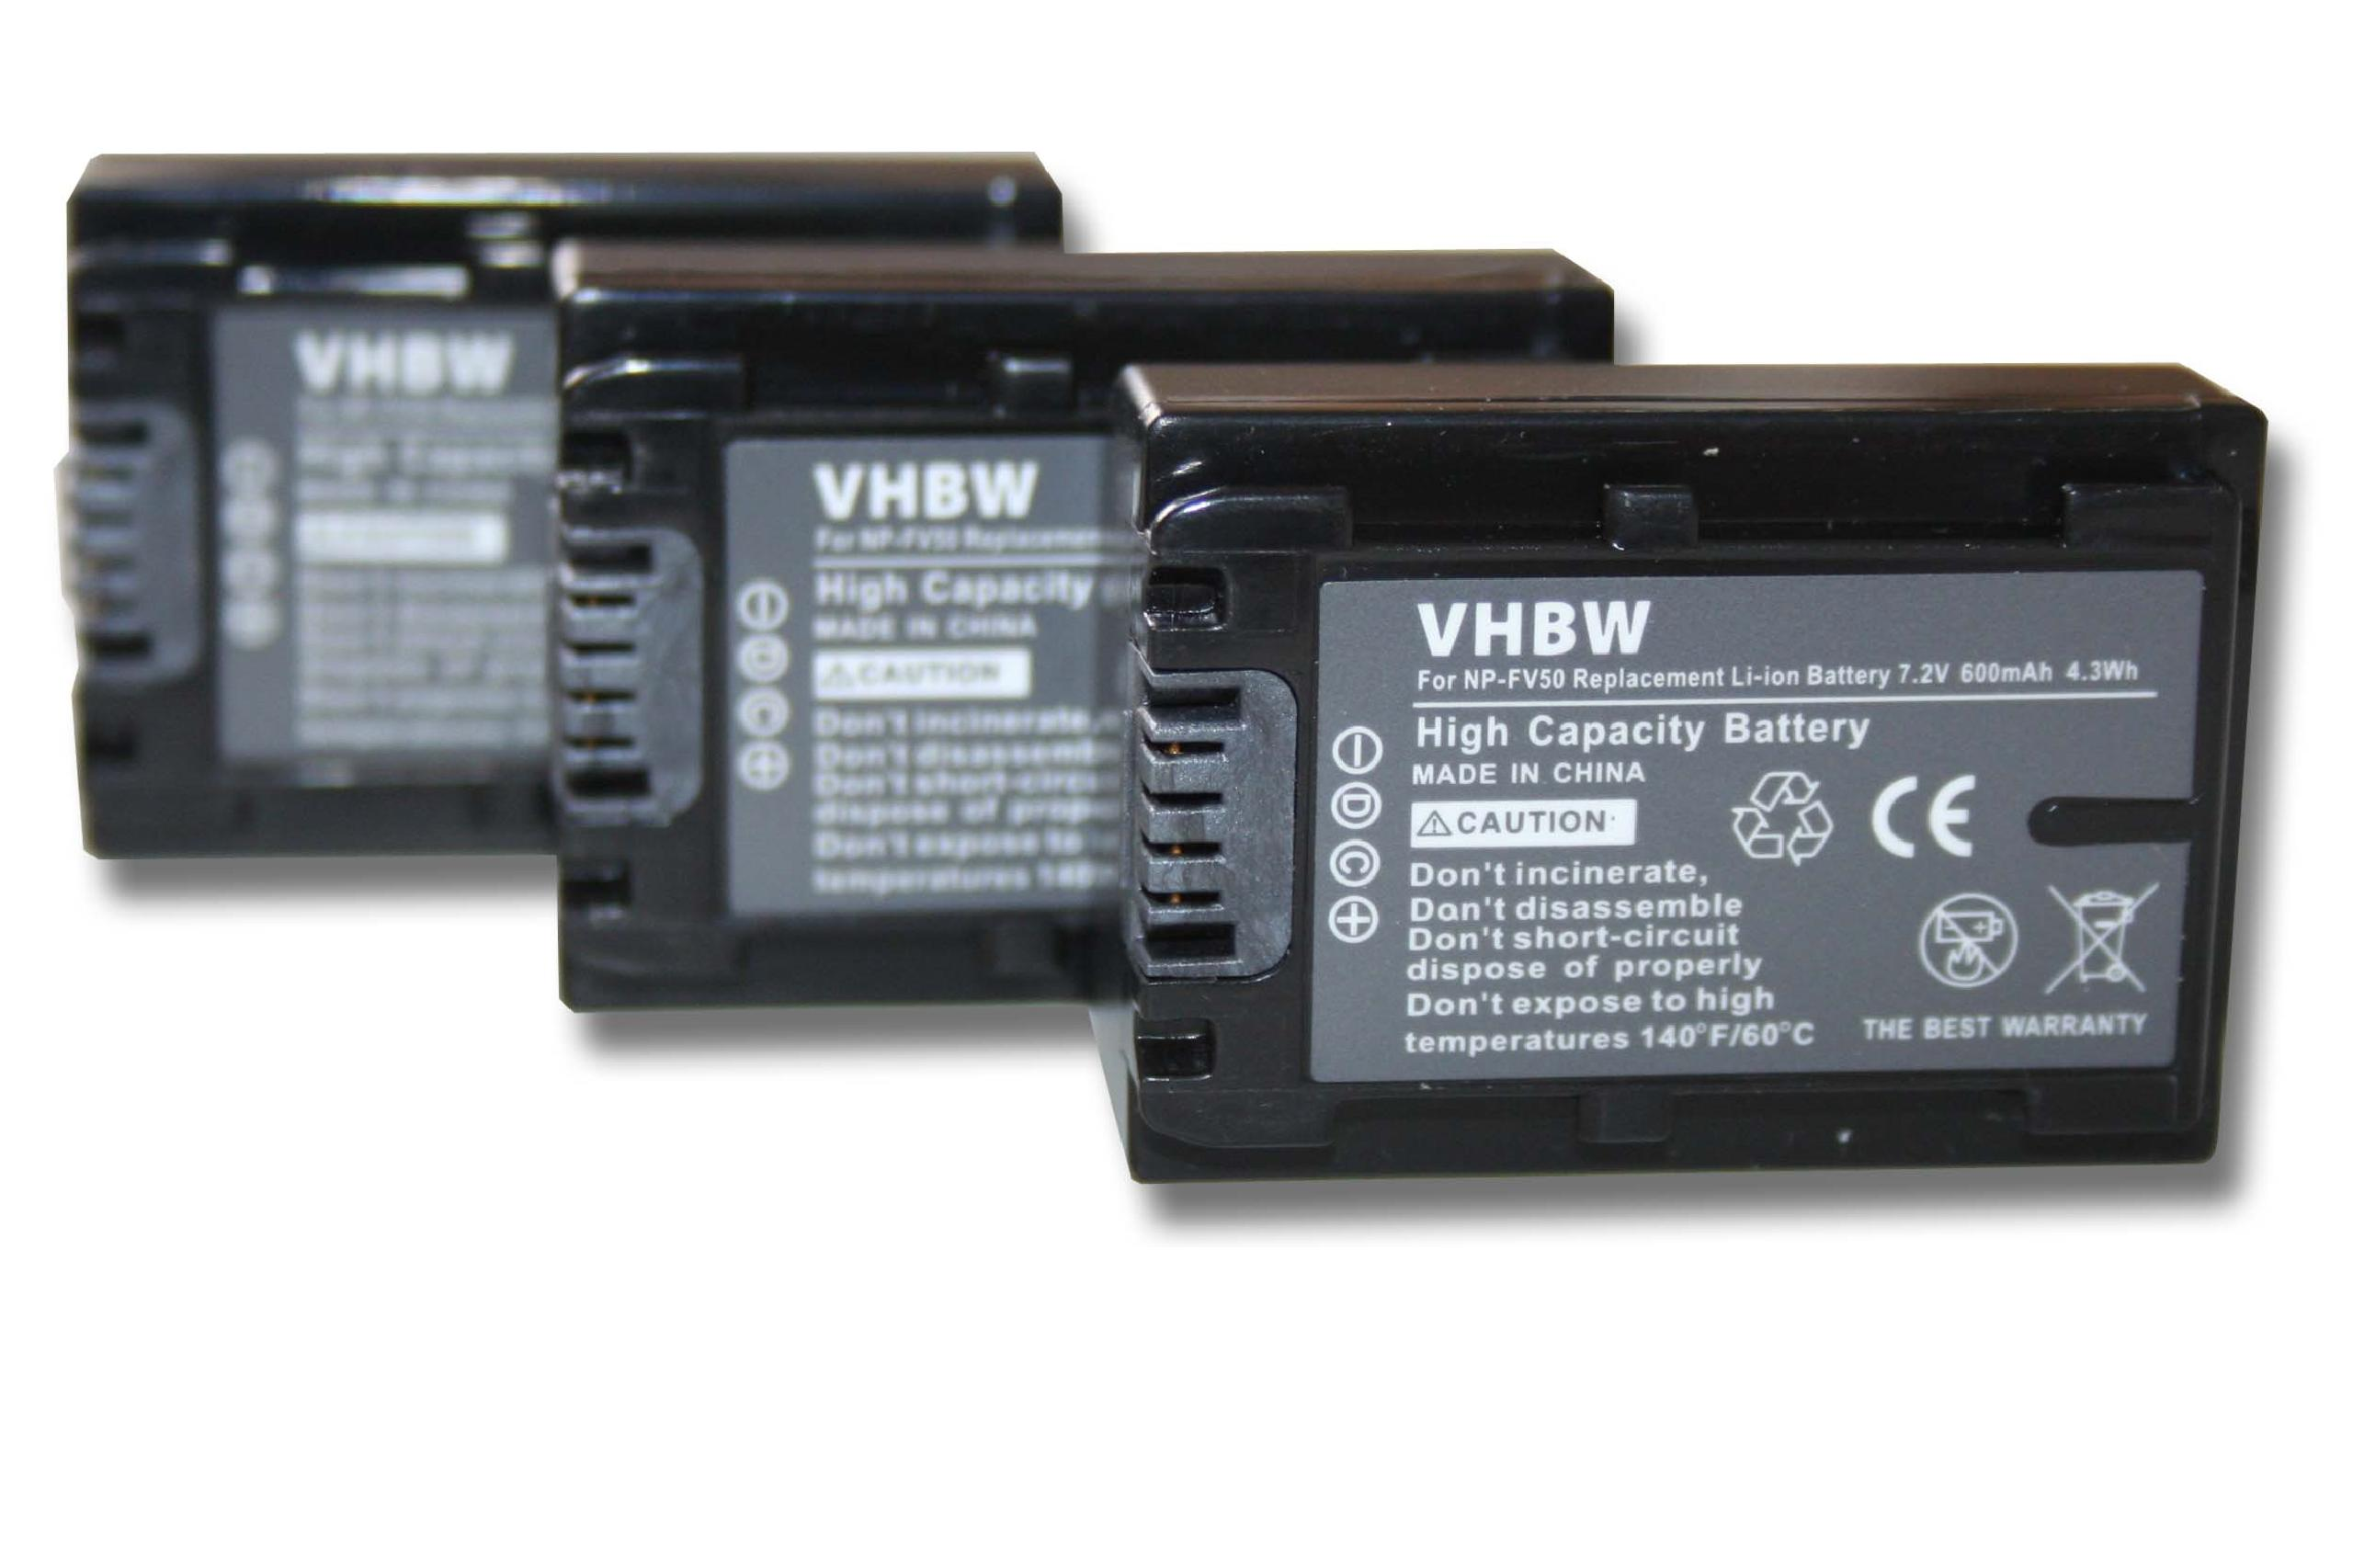 VHBW kompatibel mit Volt, Sony Akku Serie HDR-CX220ER Videokamera, 7.2 Li-Ion HDR-CX HDR-CX220ES, HDR-CX250E, - 600